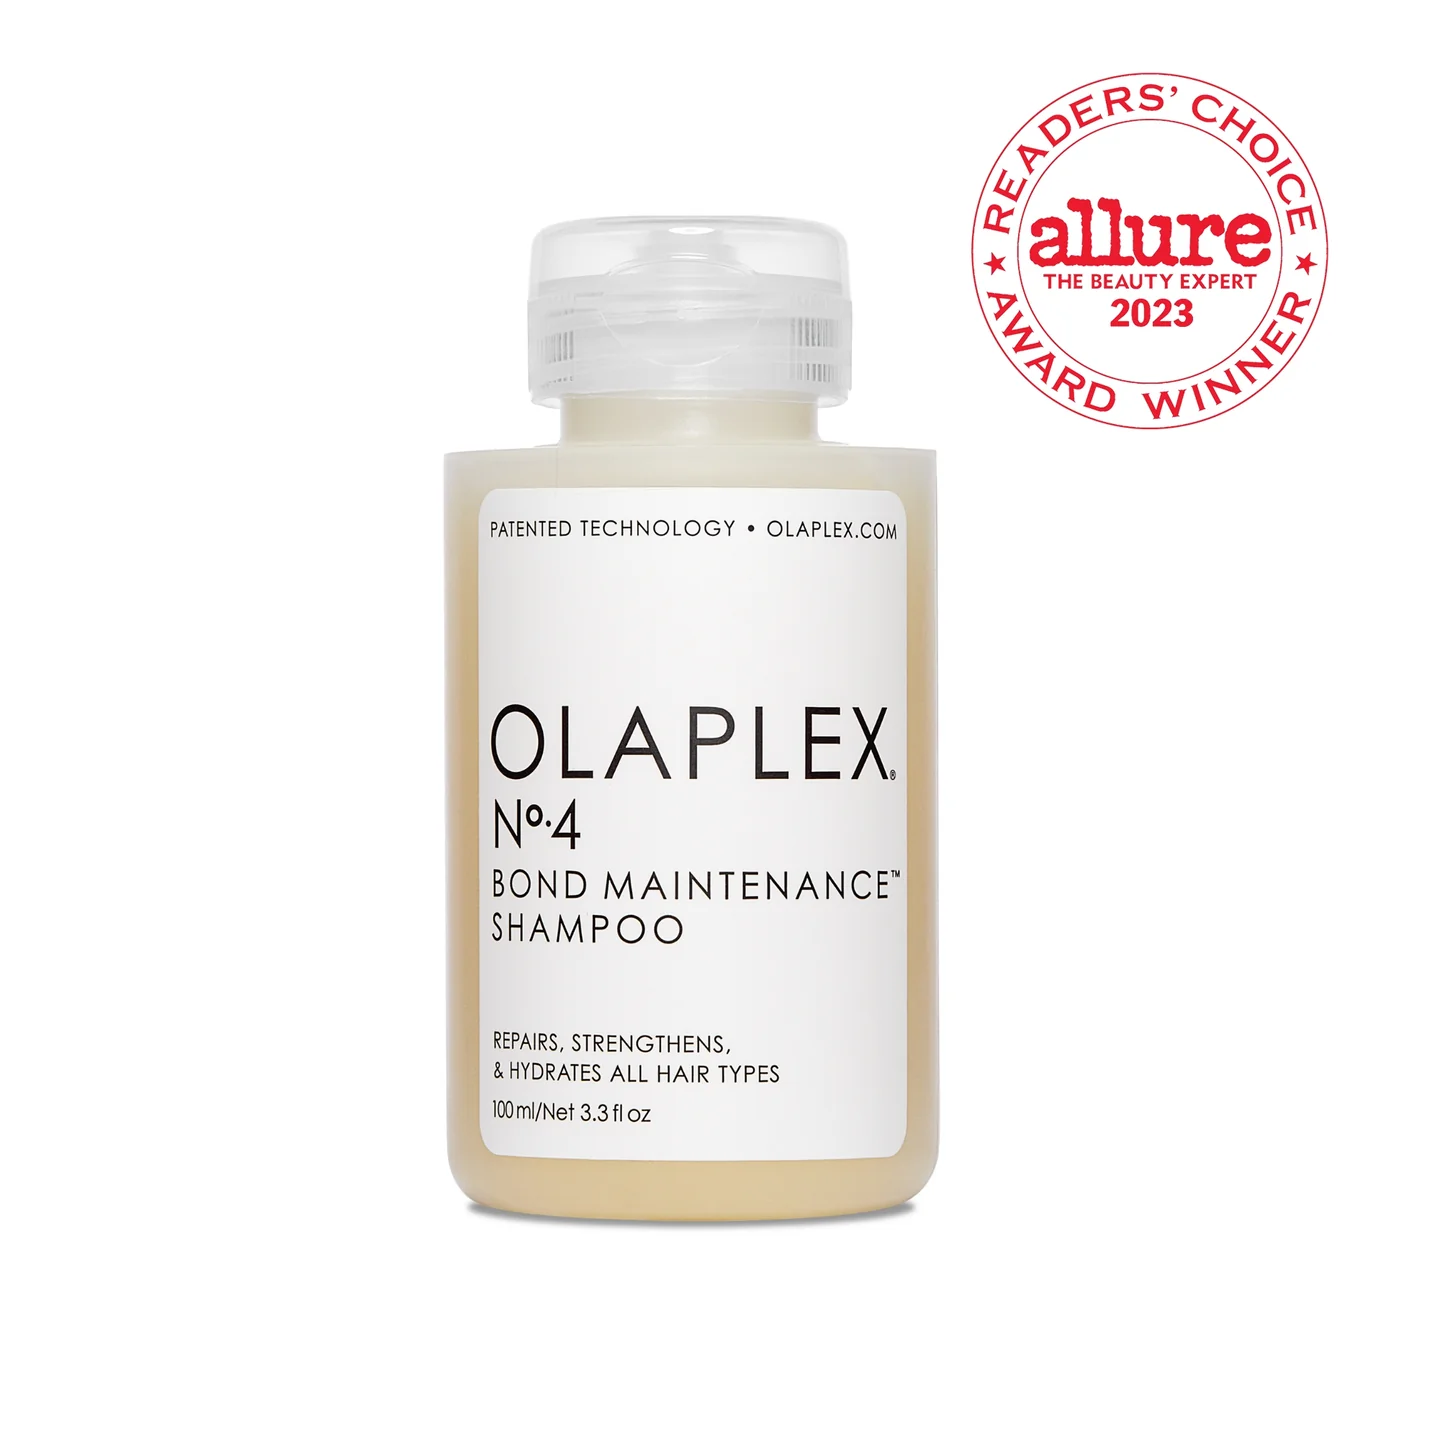 Is Olaplex a cruelty-free haircare brand?